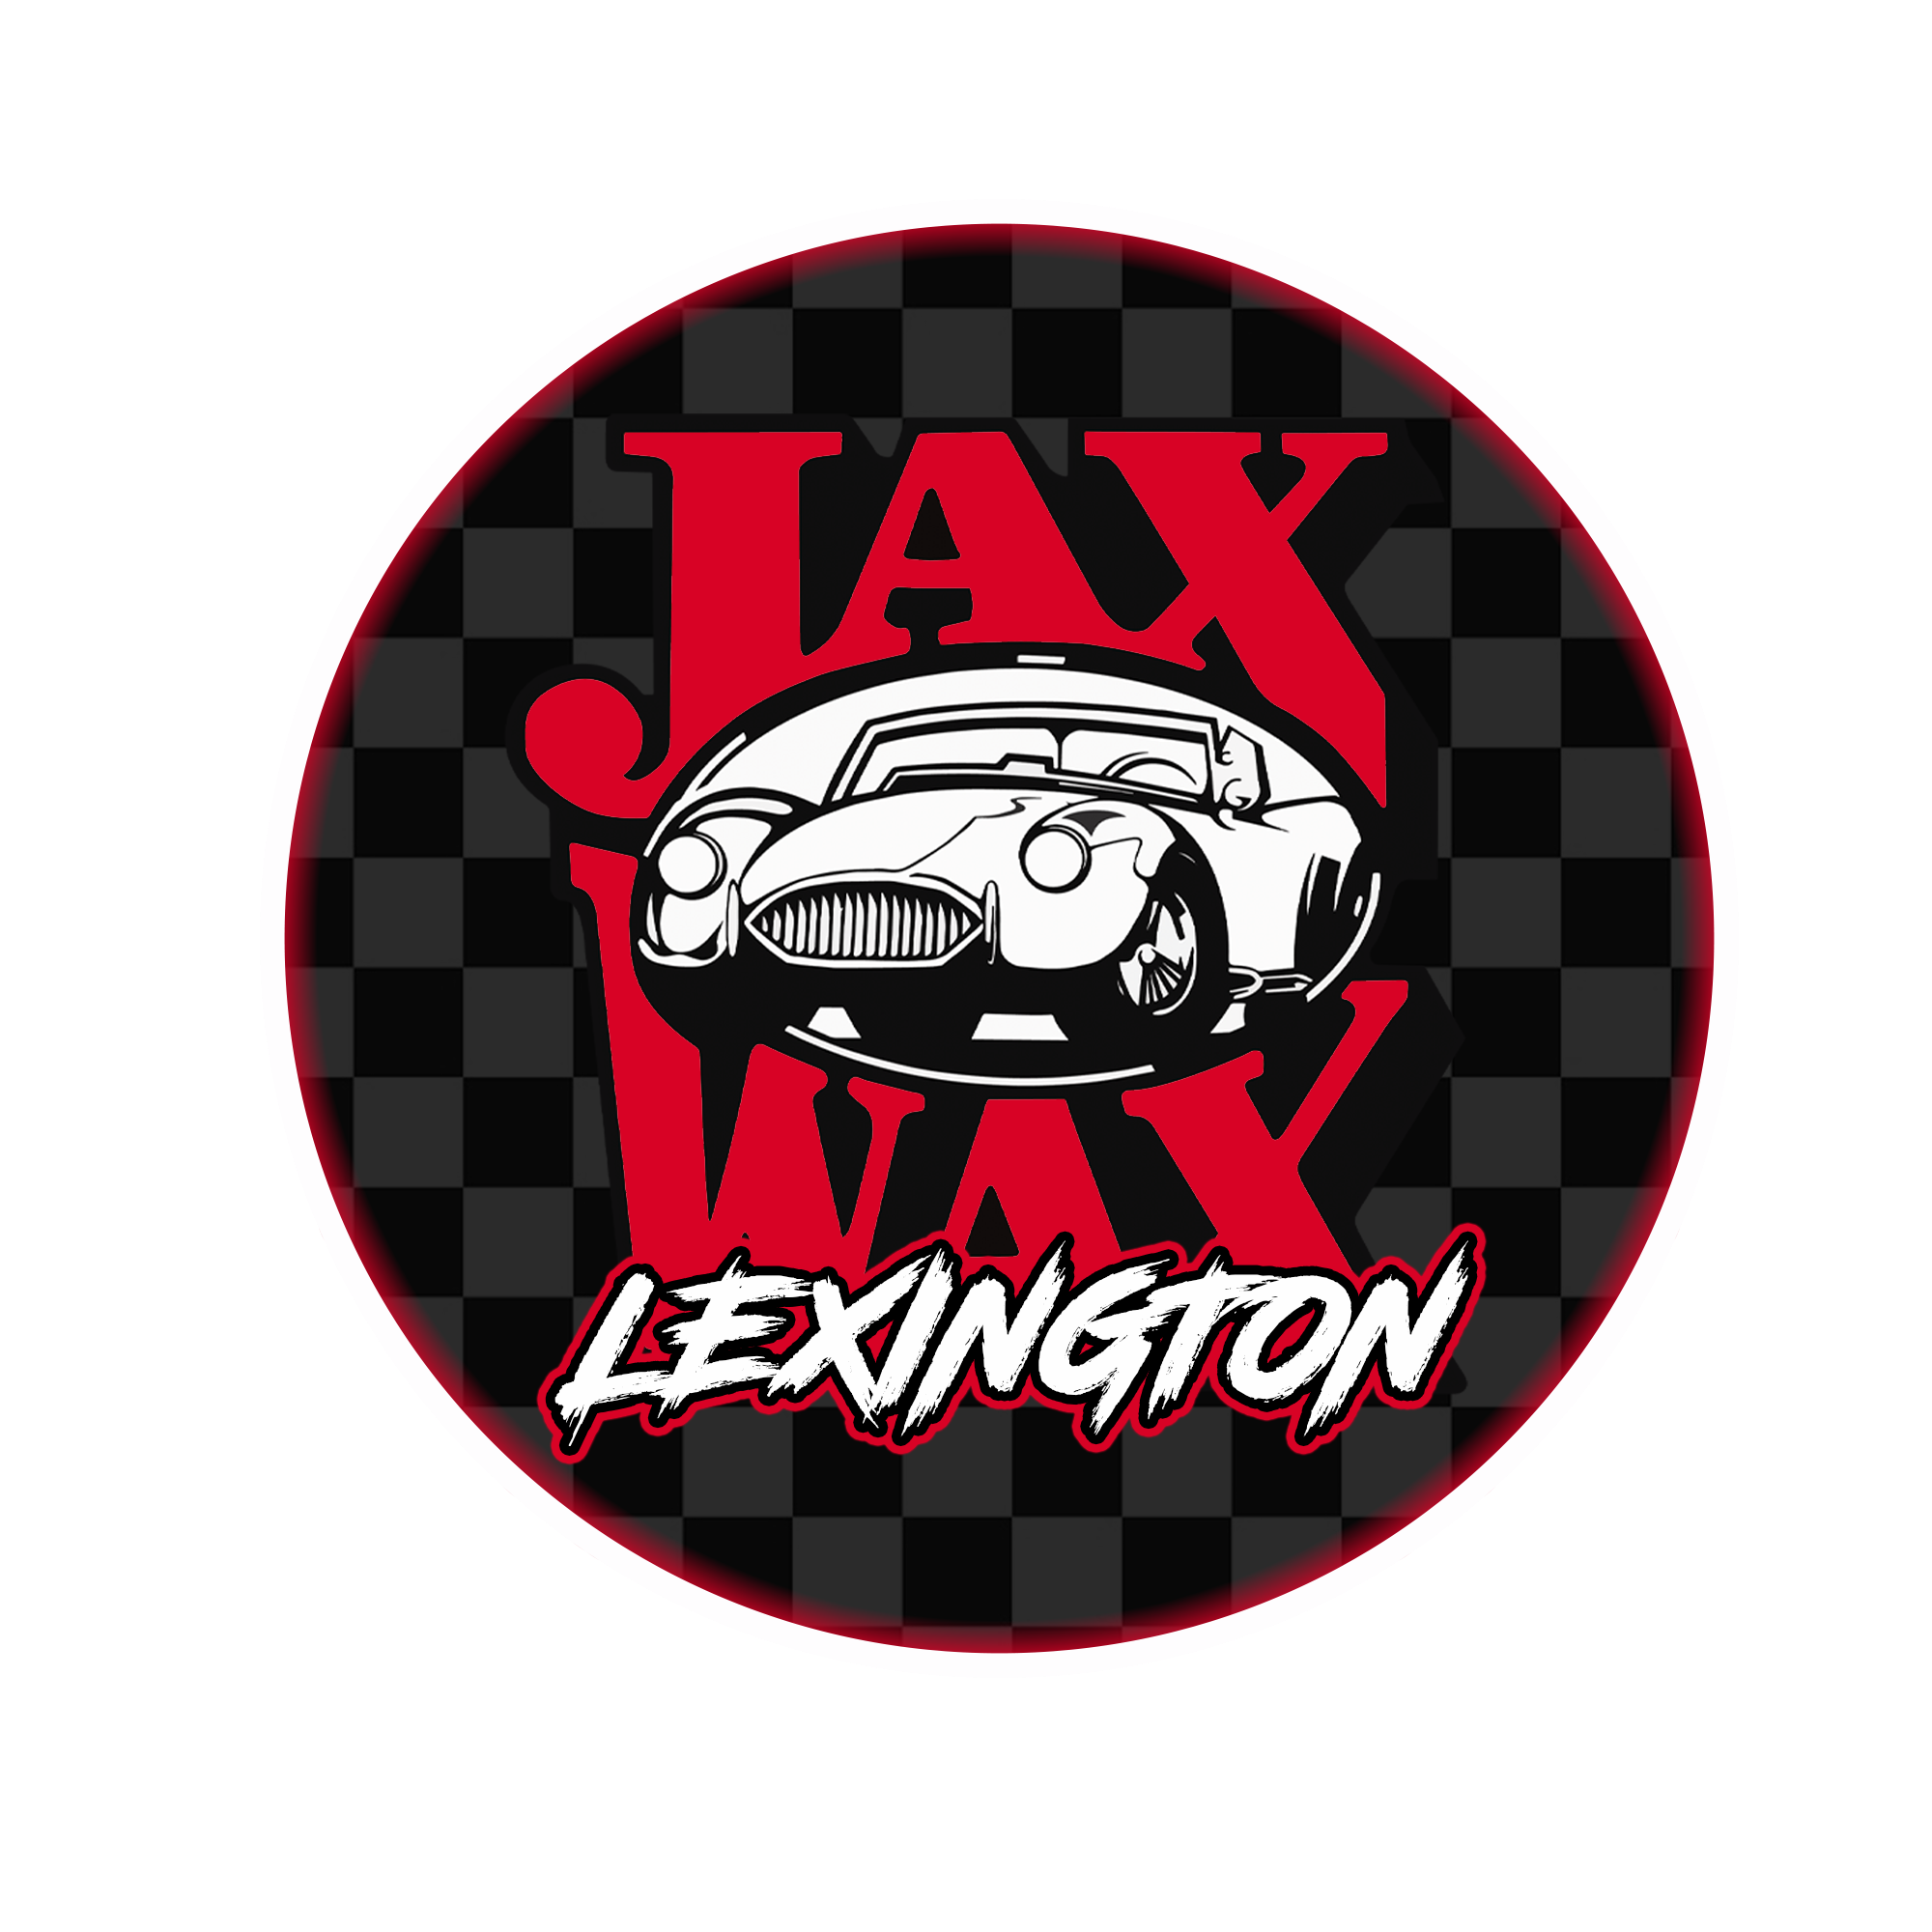 Jax Wax Lexington